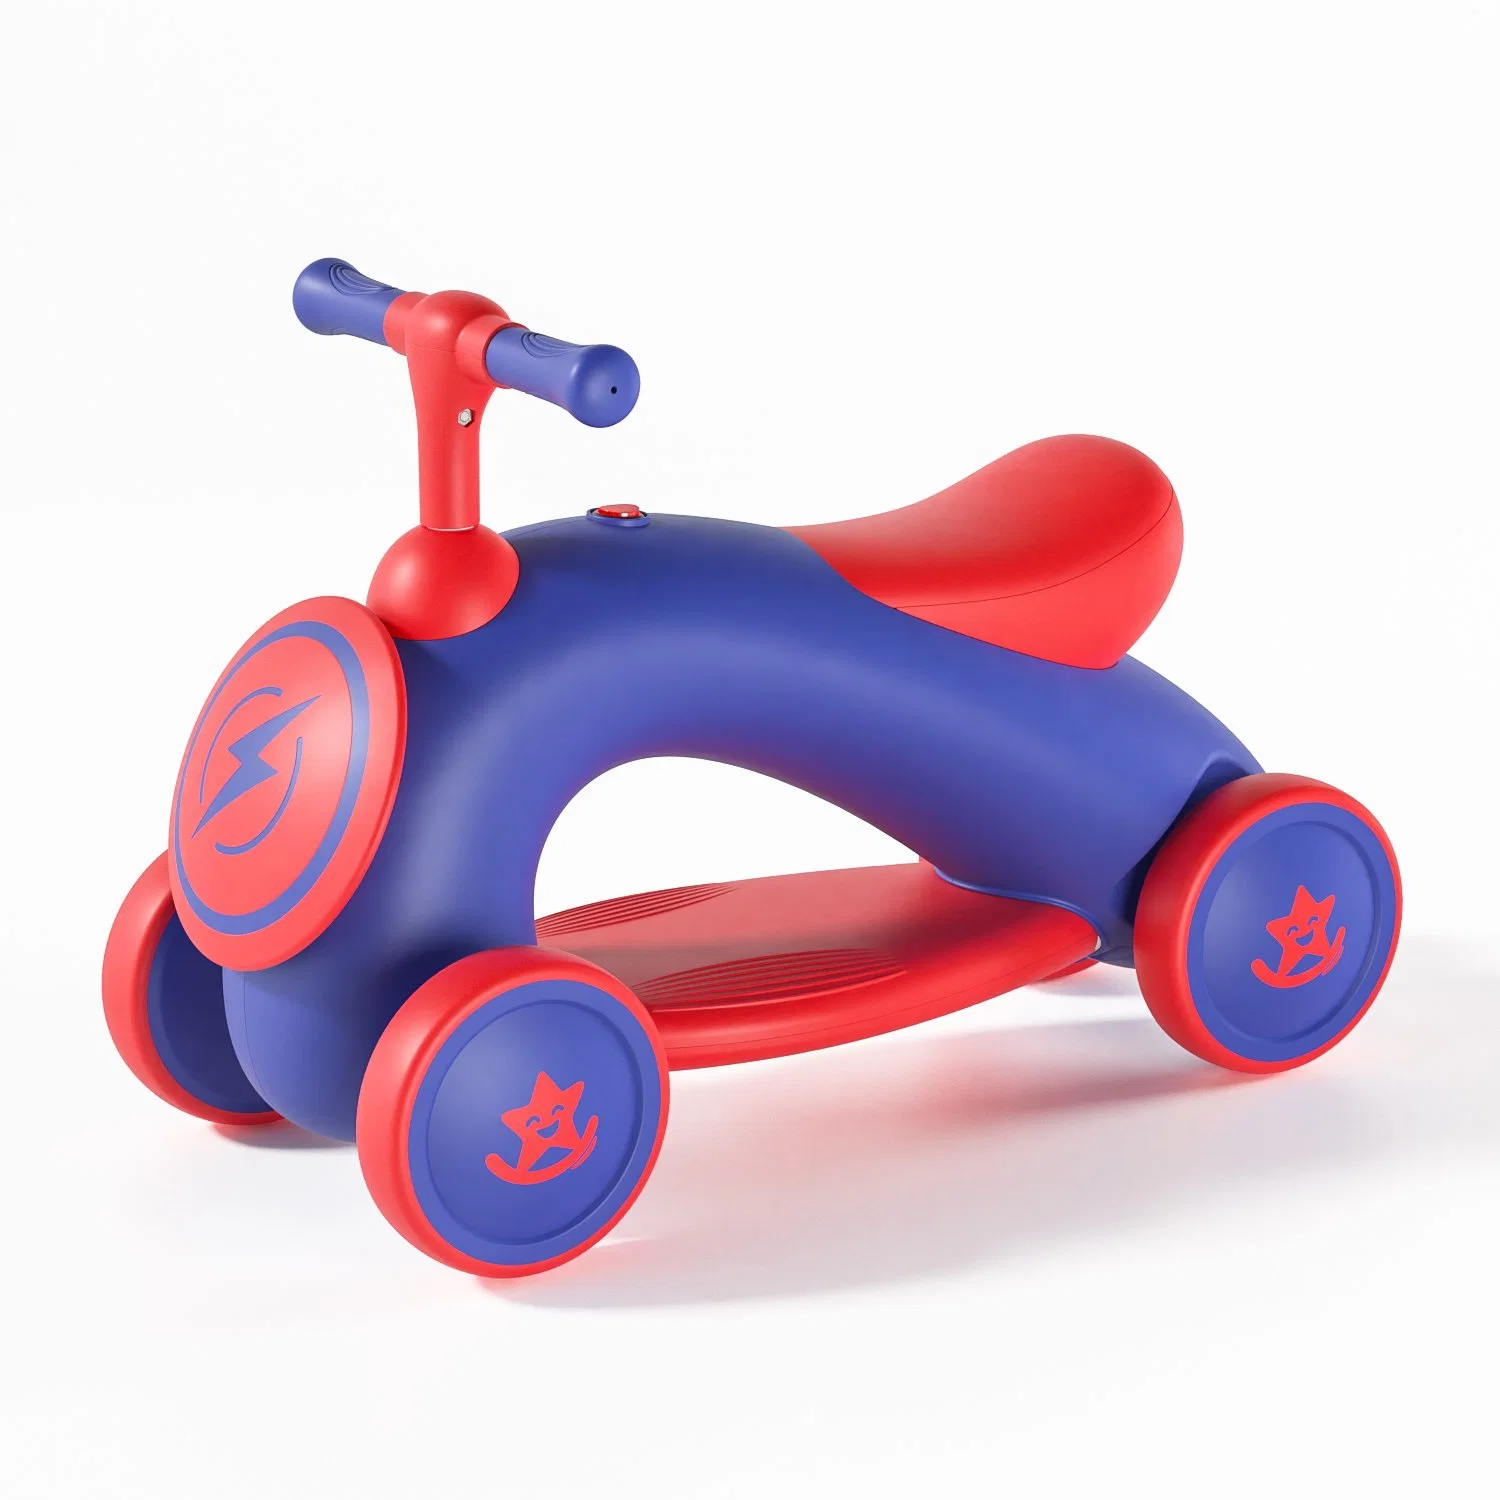 Factory New Style 4 Wheel Children Balance Bike Kids Ride on Toy Tricycle Mini Baby Walking Car